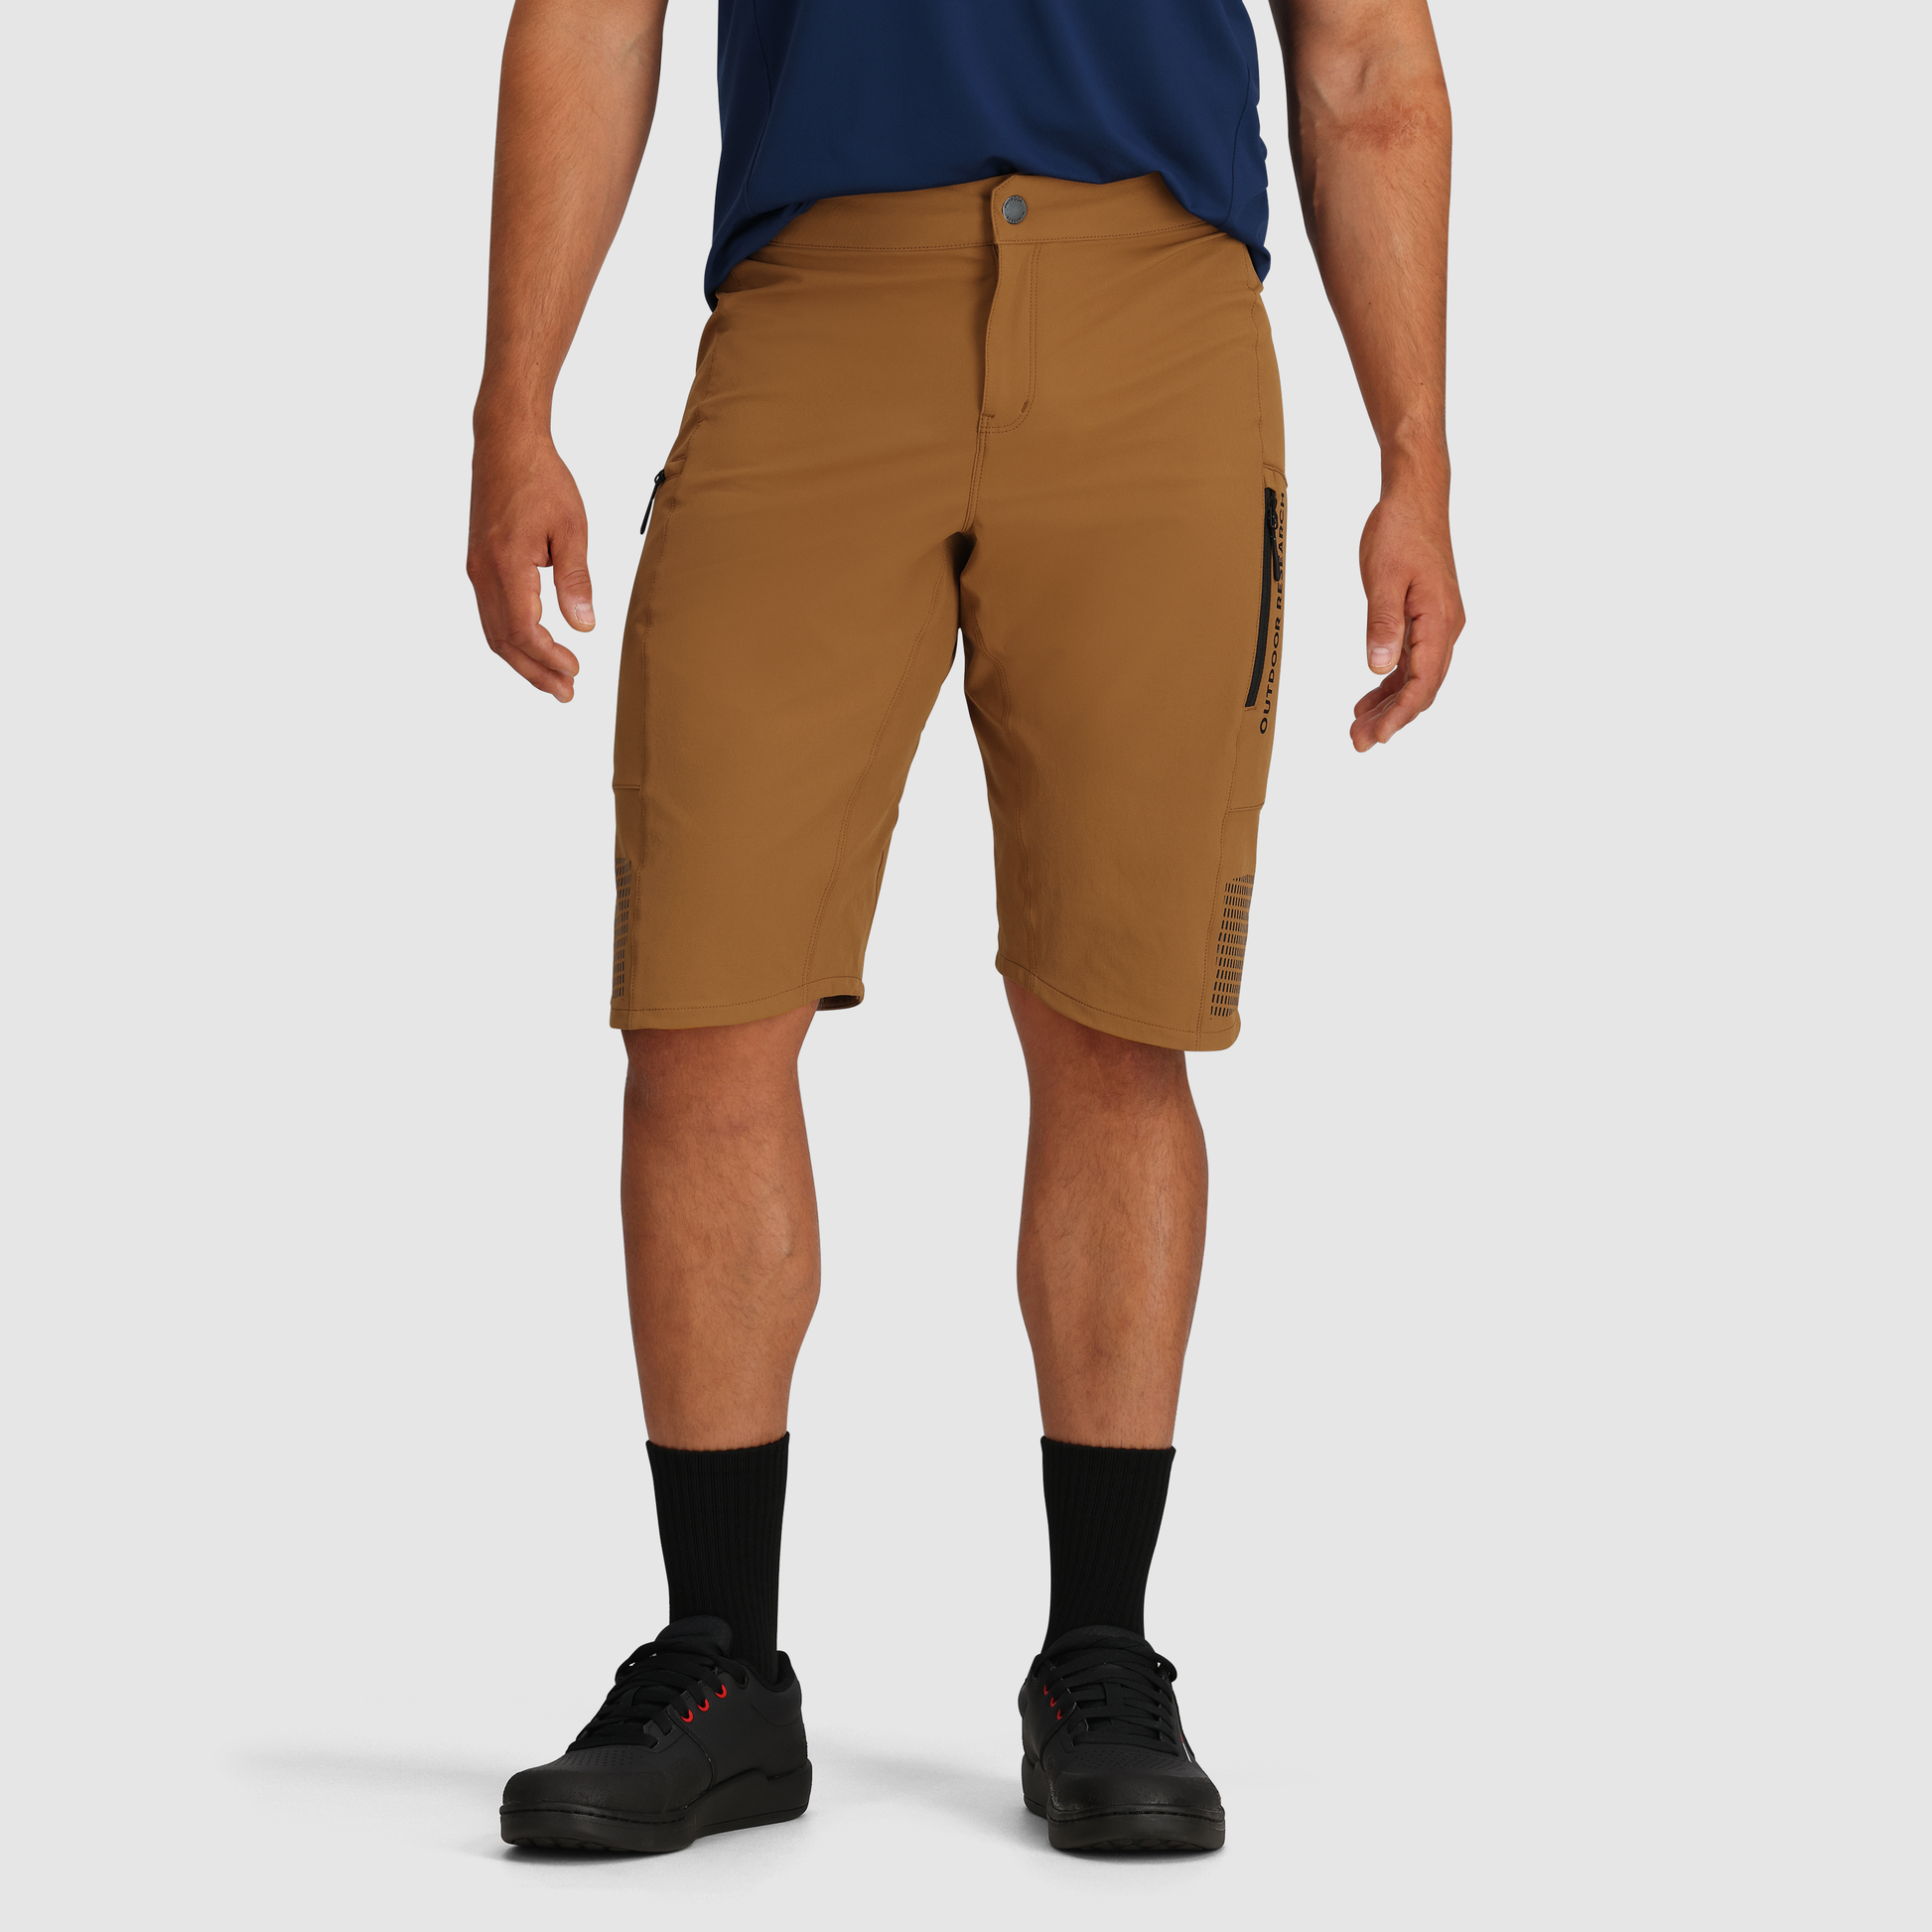 Men's reinforced Hiking shorts